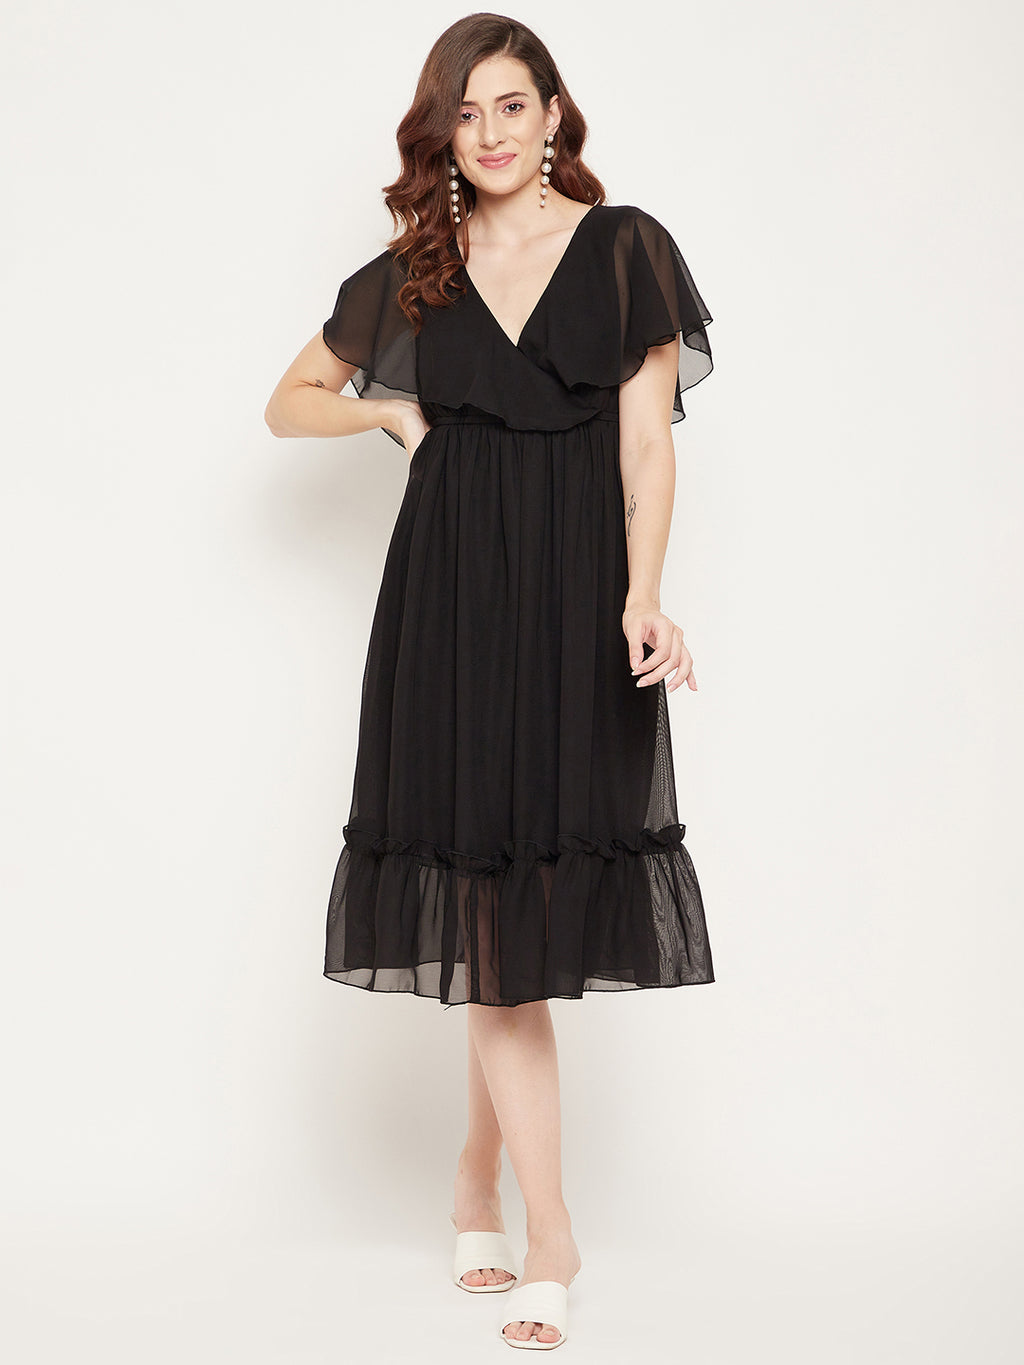 Black Georgette Fit & Flare Dress